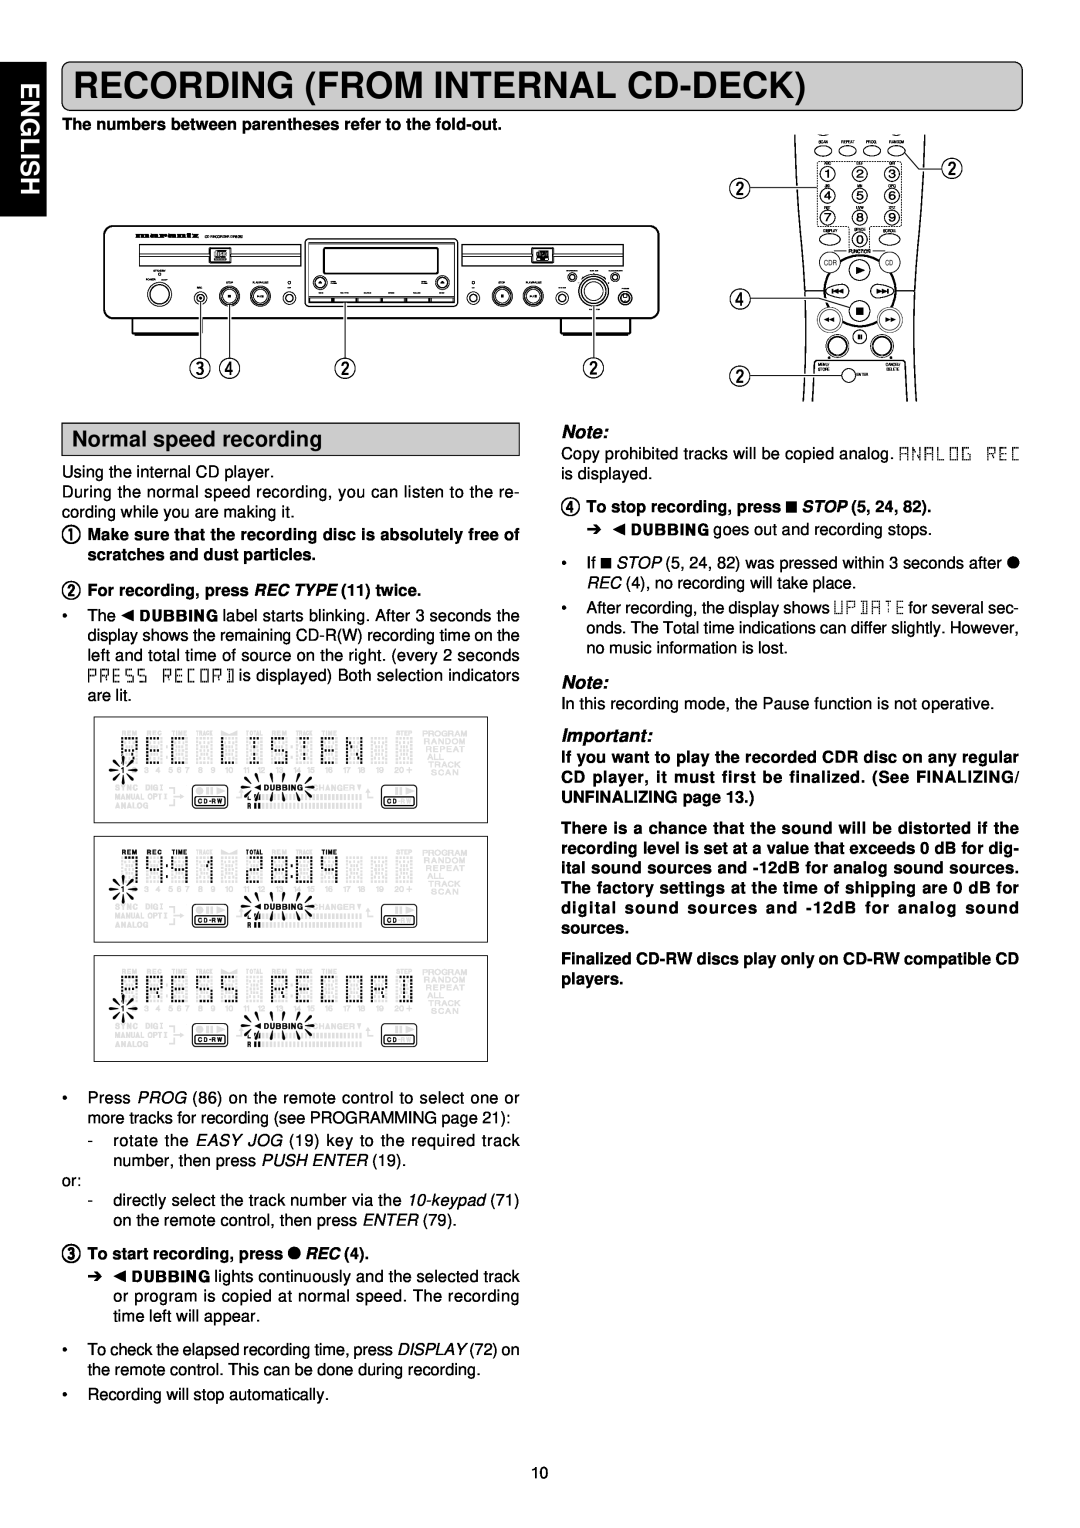 Marantz DR6050 manual Recording From Internal Cd-Deck, English, Normal speed recording 